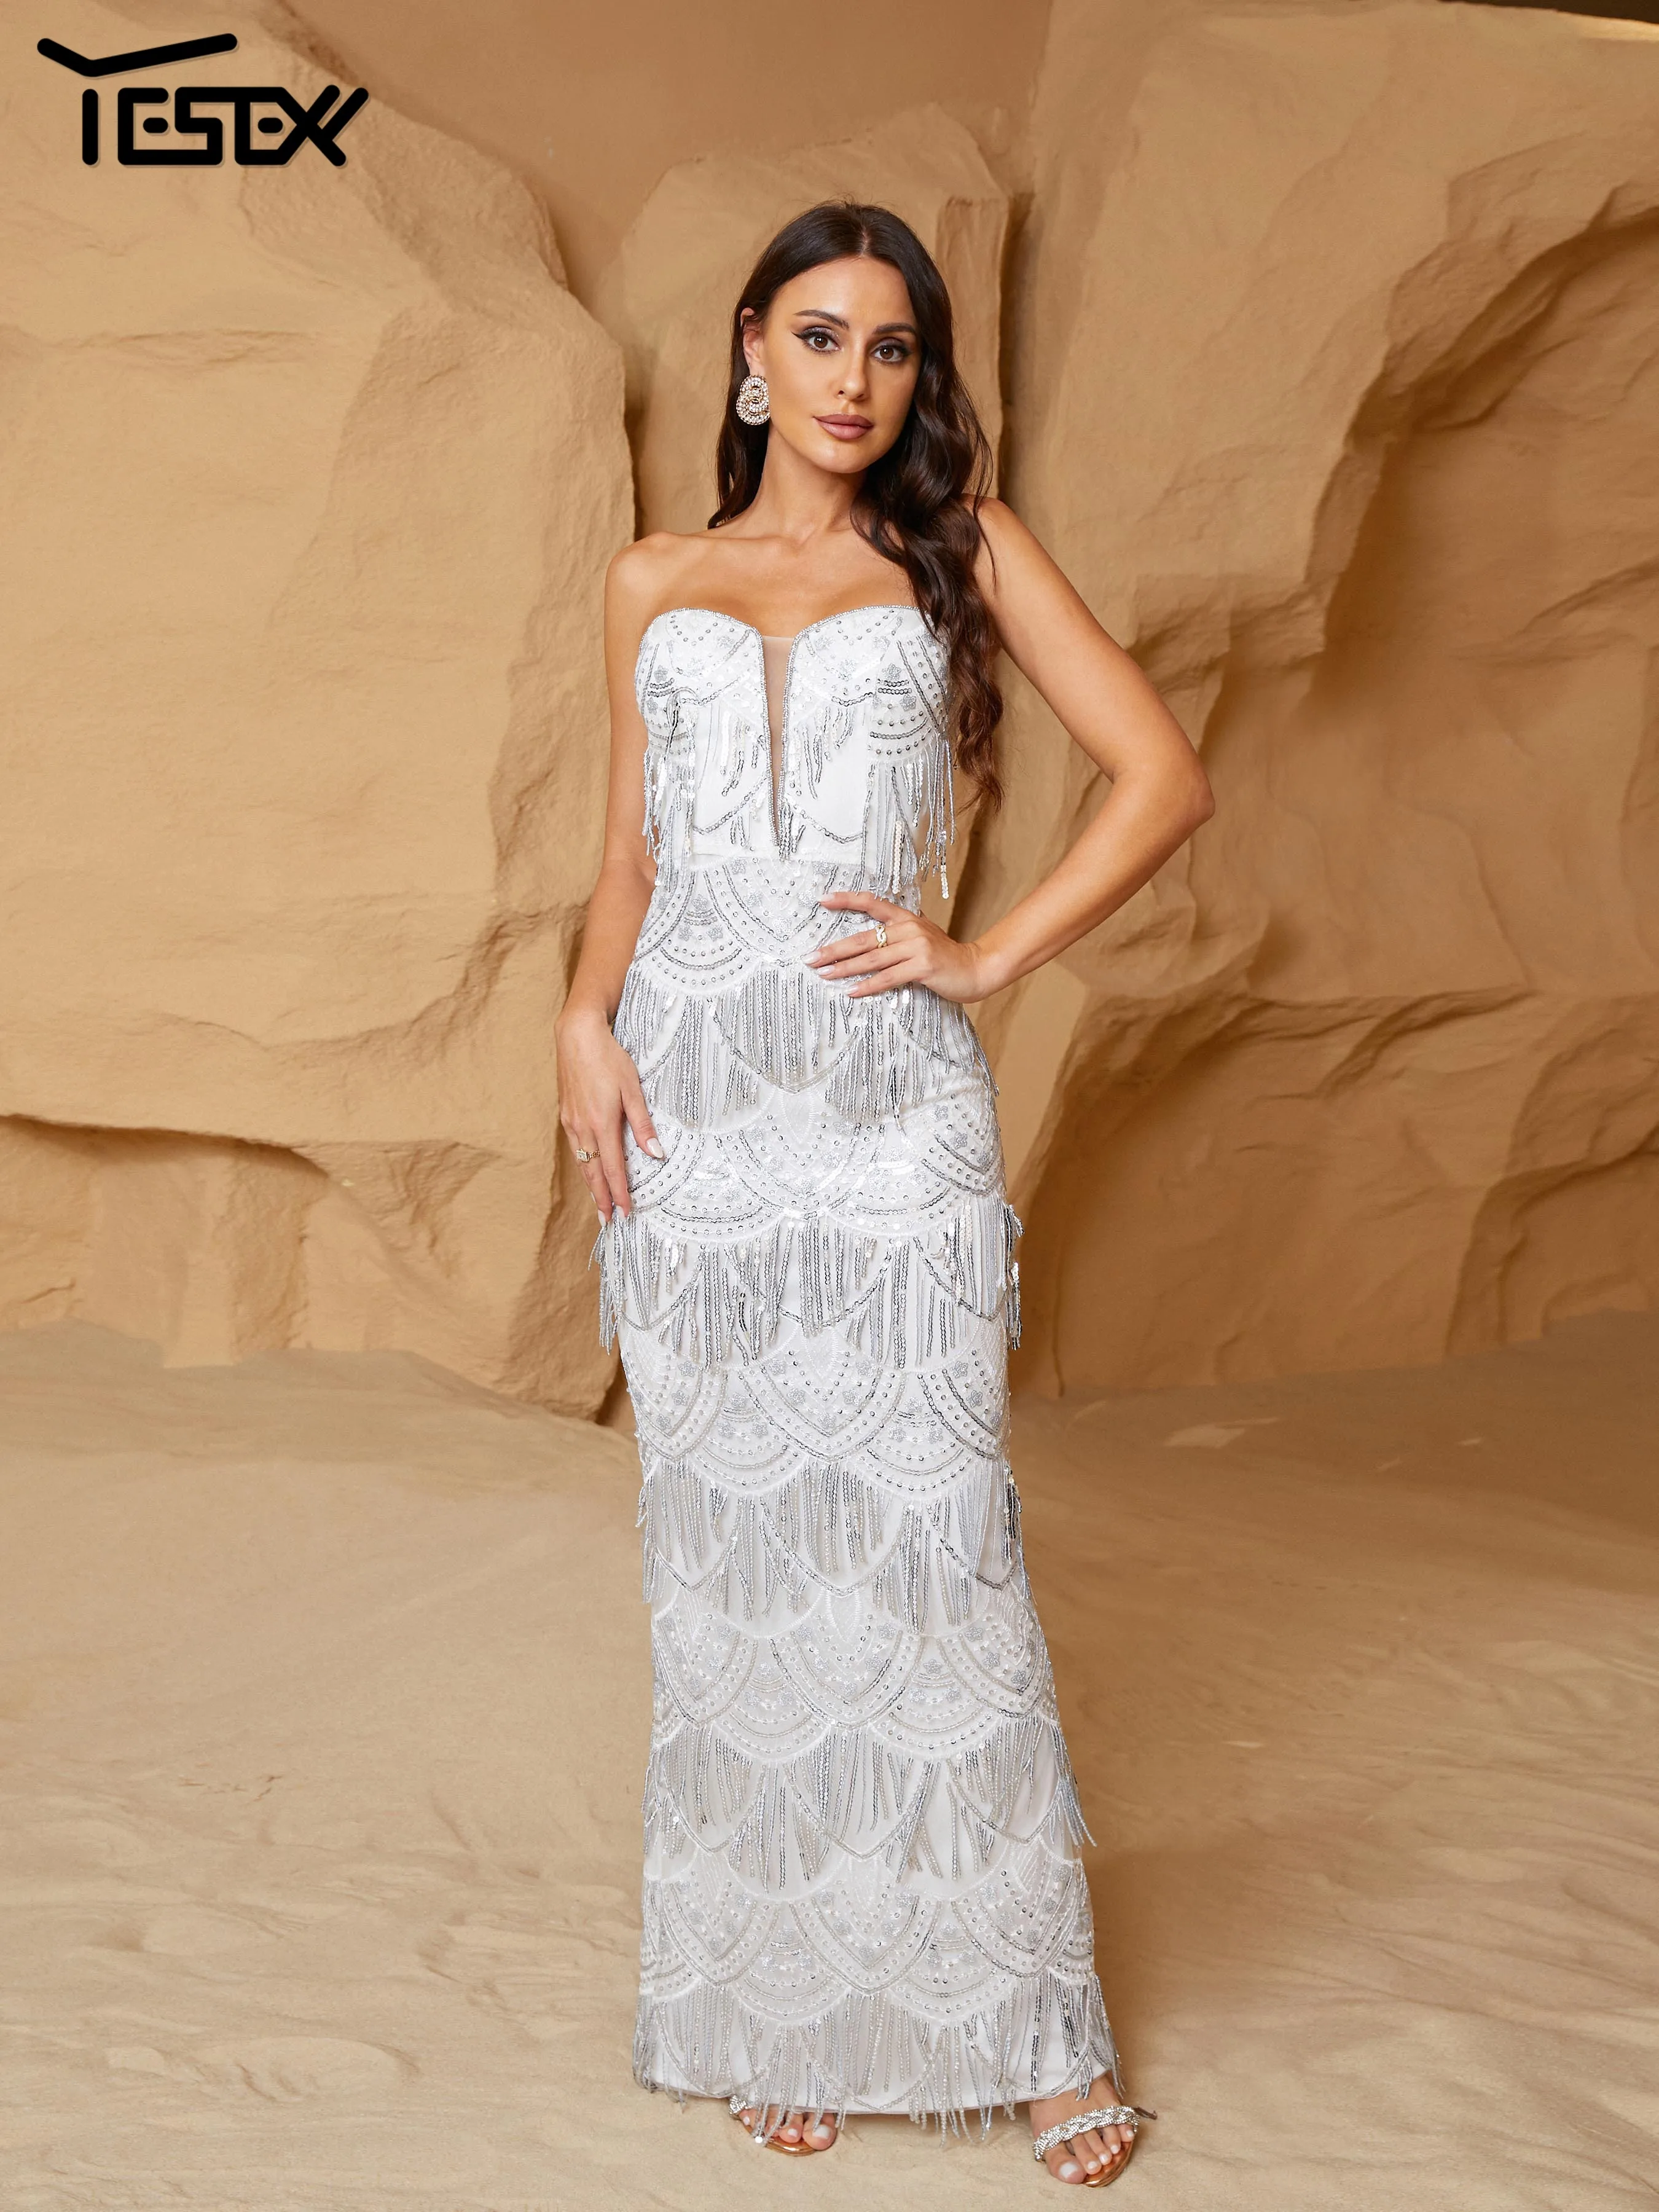 yesexy-new-strapless-sequin-chic-elegant-tassel-mermaid-evening-wedding-prom-formal-occasion-dresses